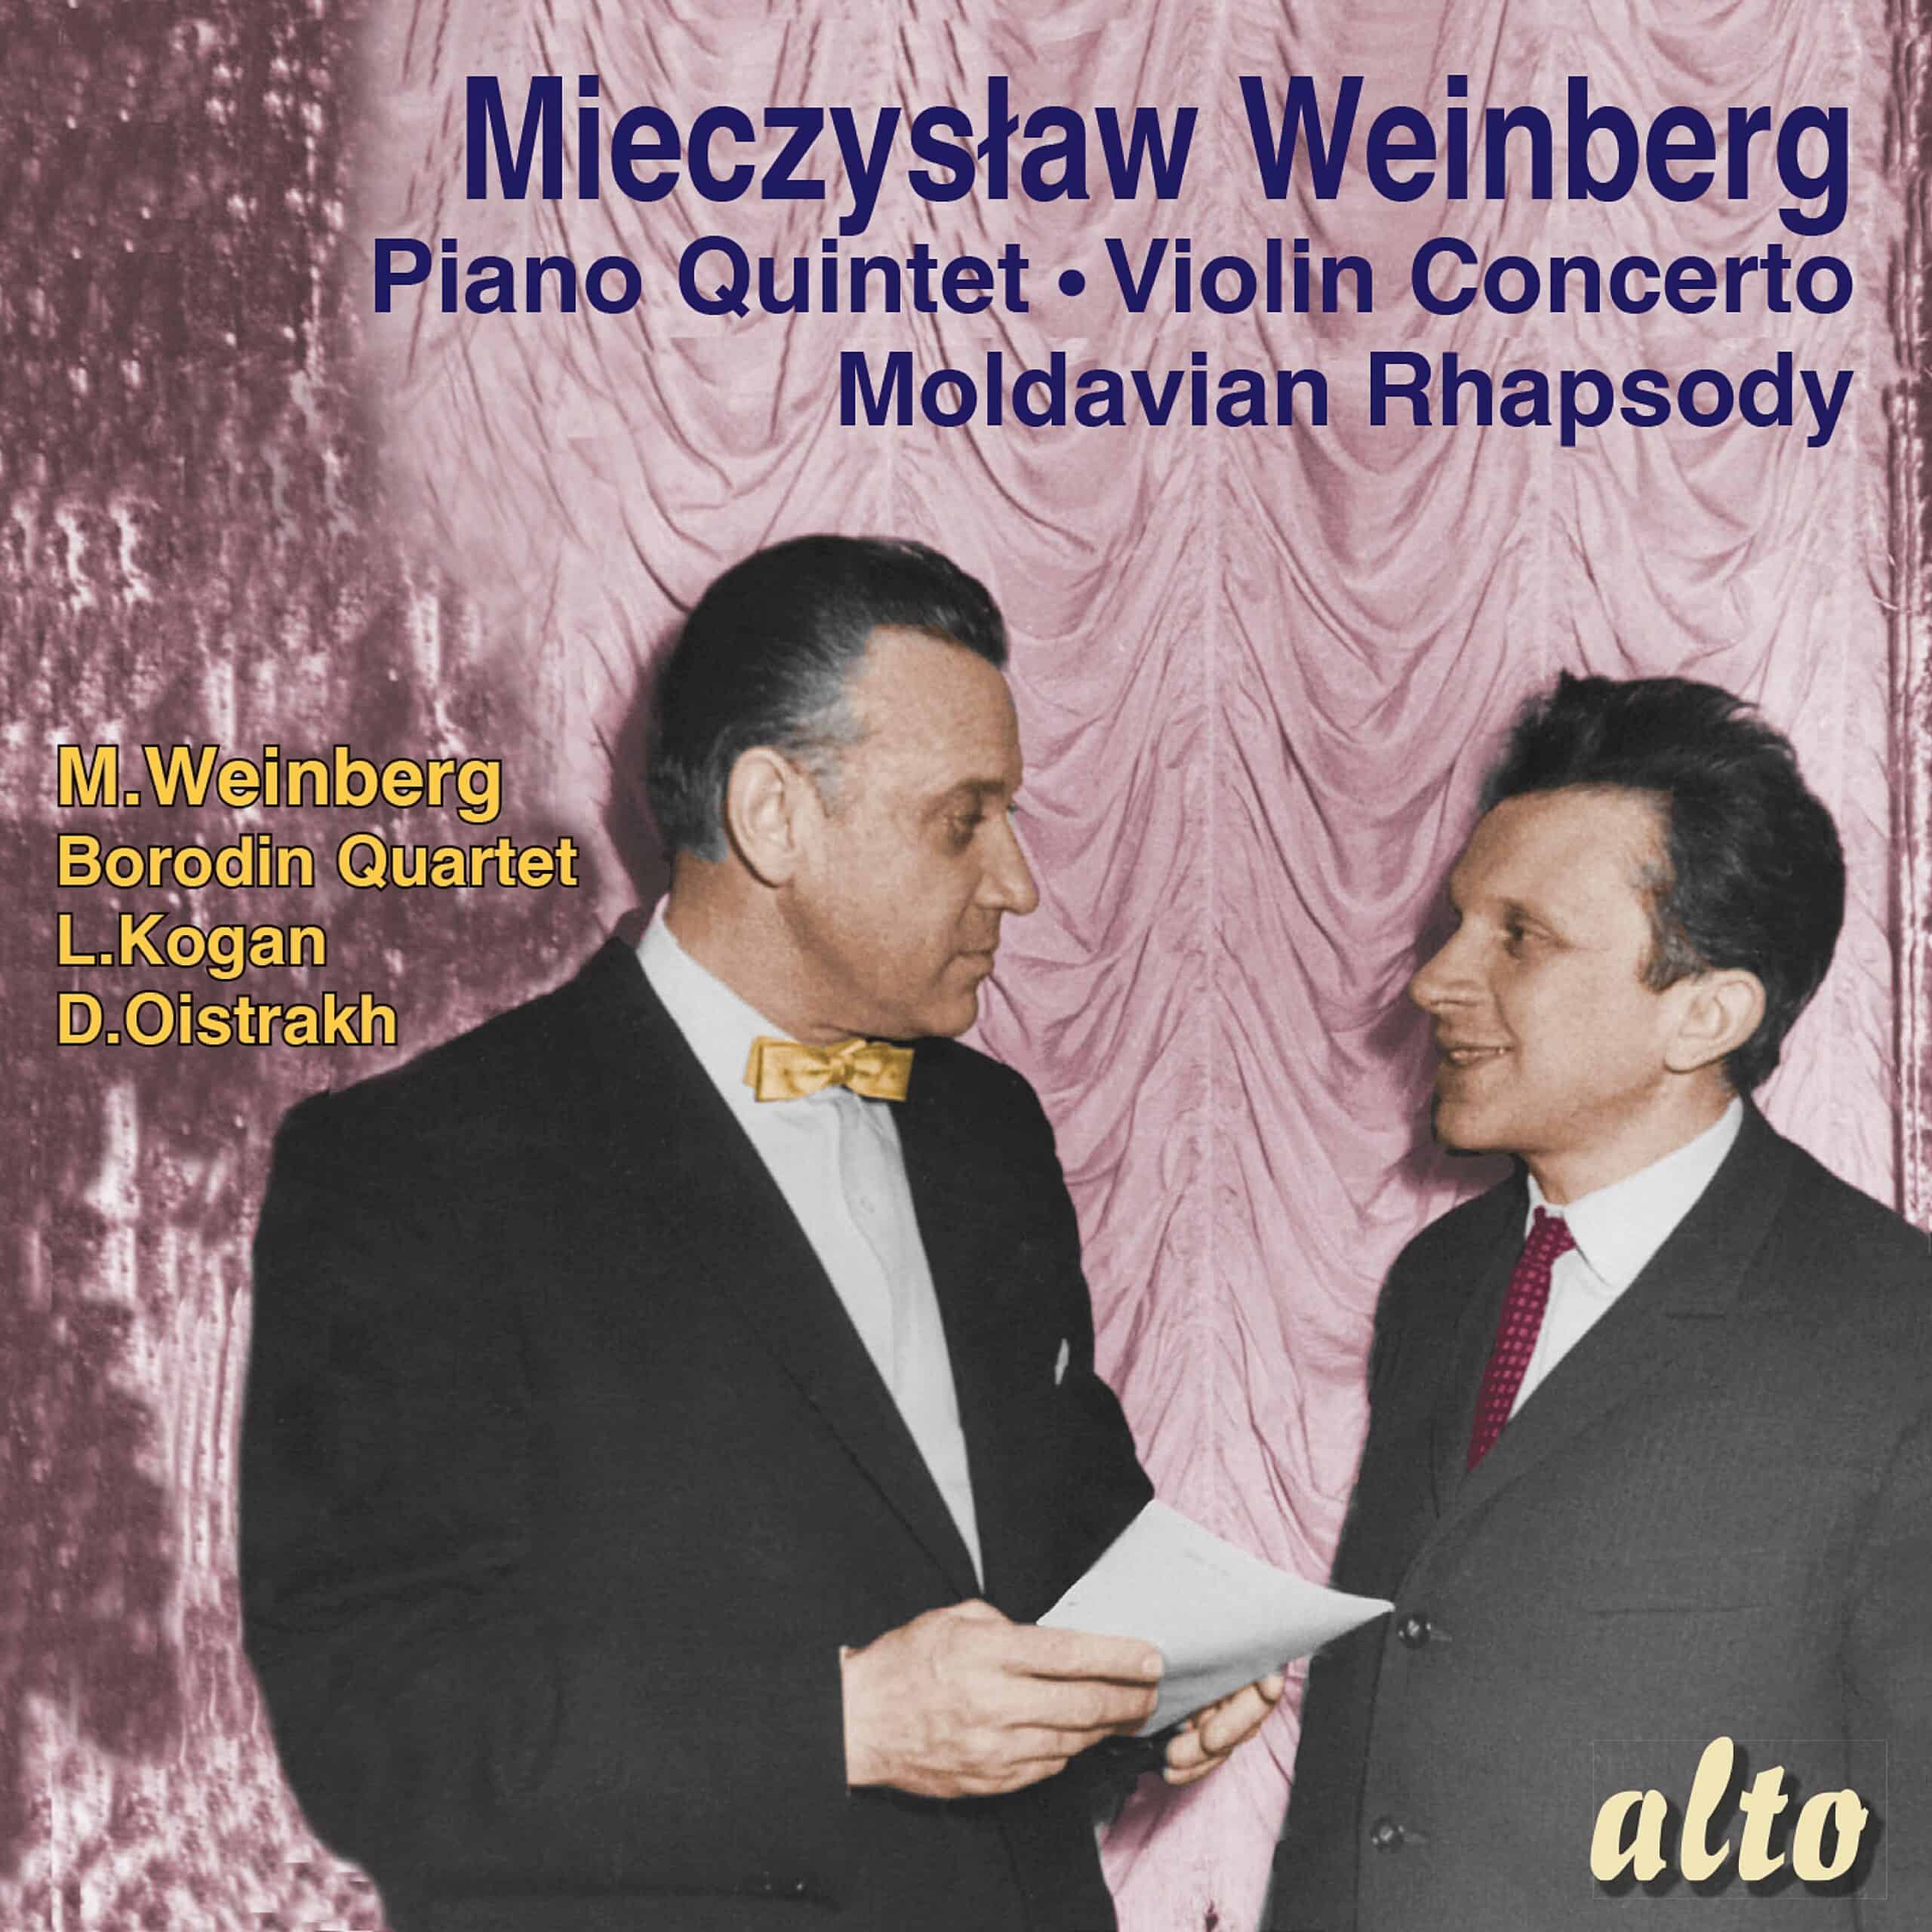 Mieczysław Weinberg: Piano Quintet, Violin Concerto & Moldovian Rhapsody